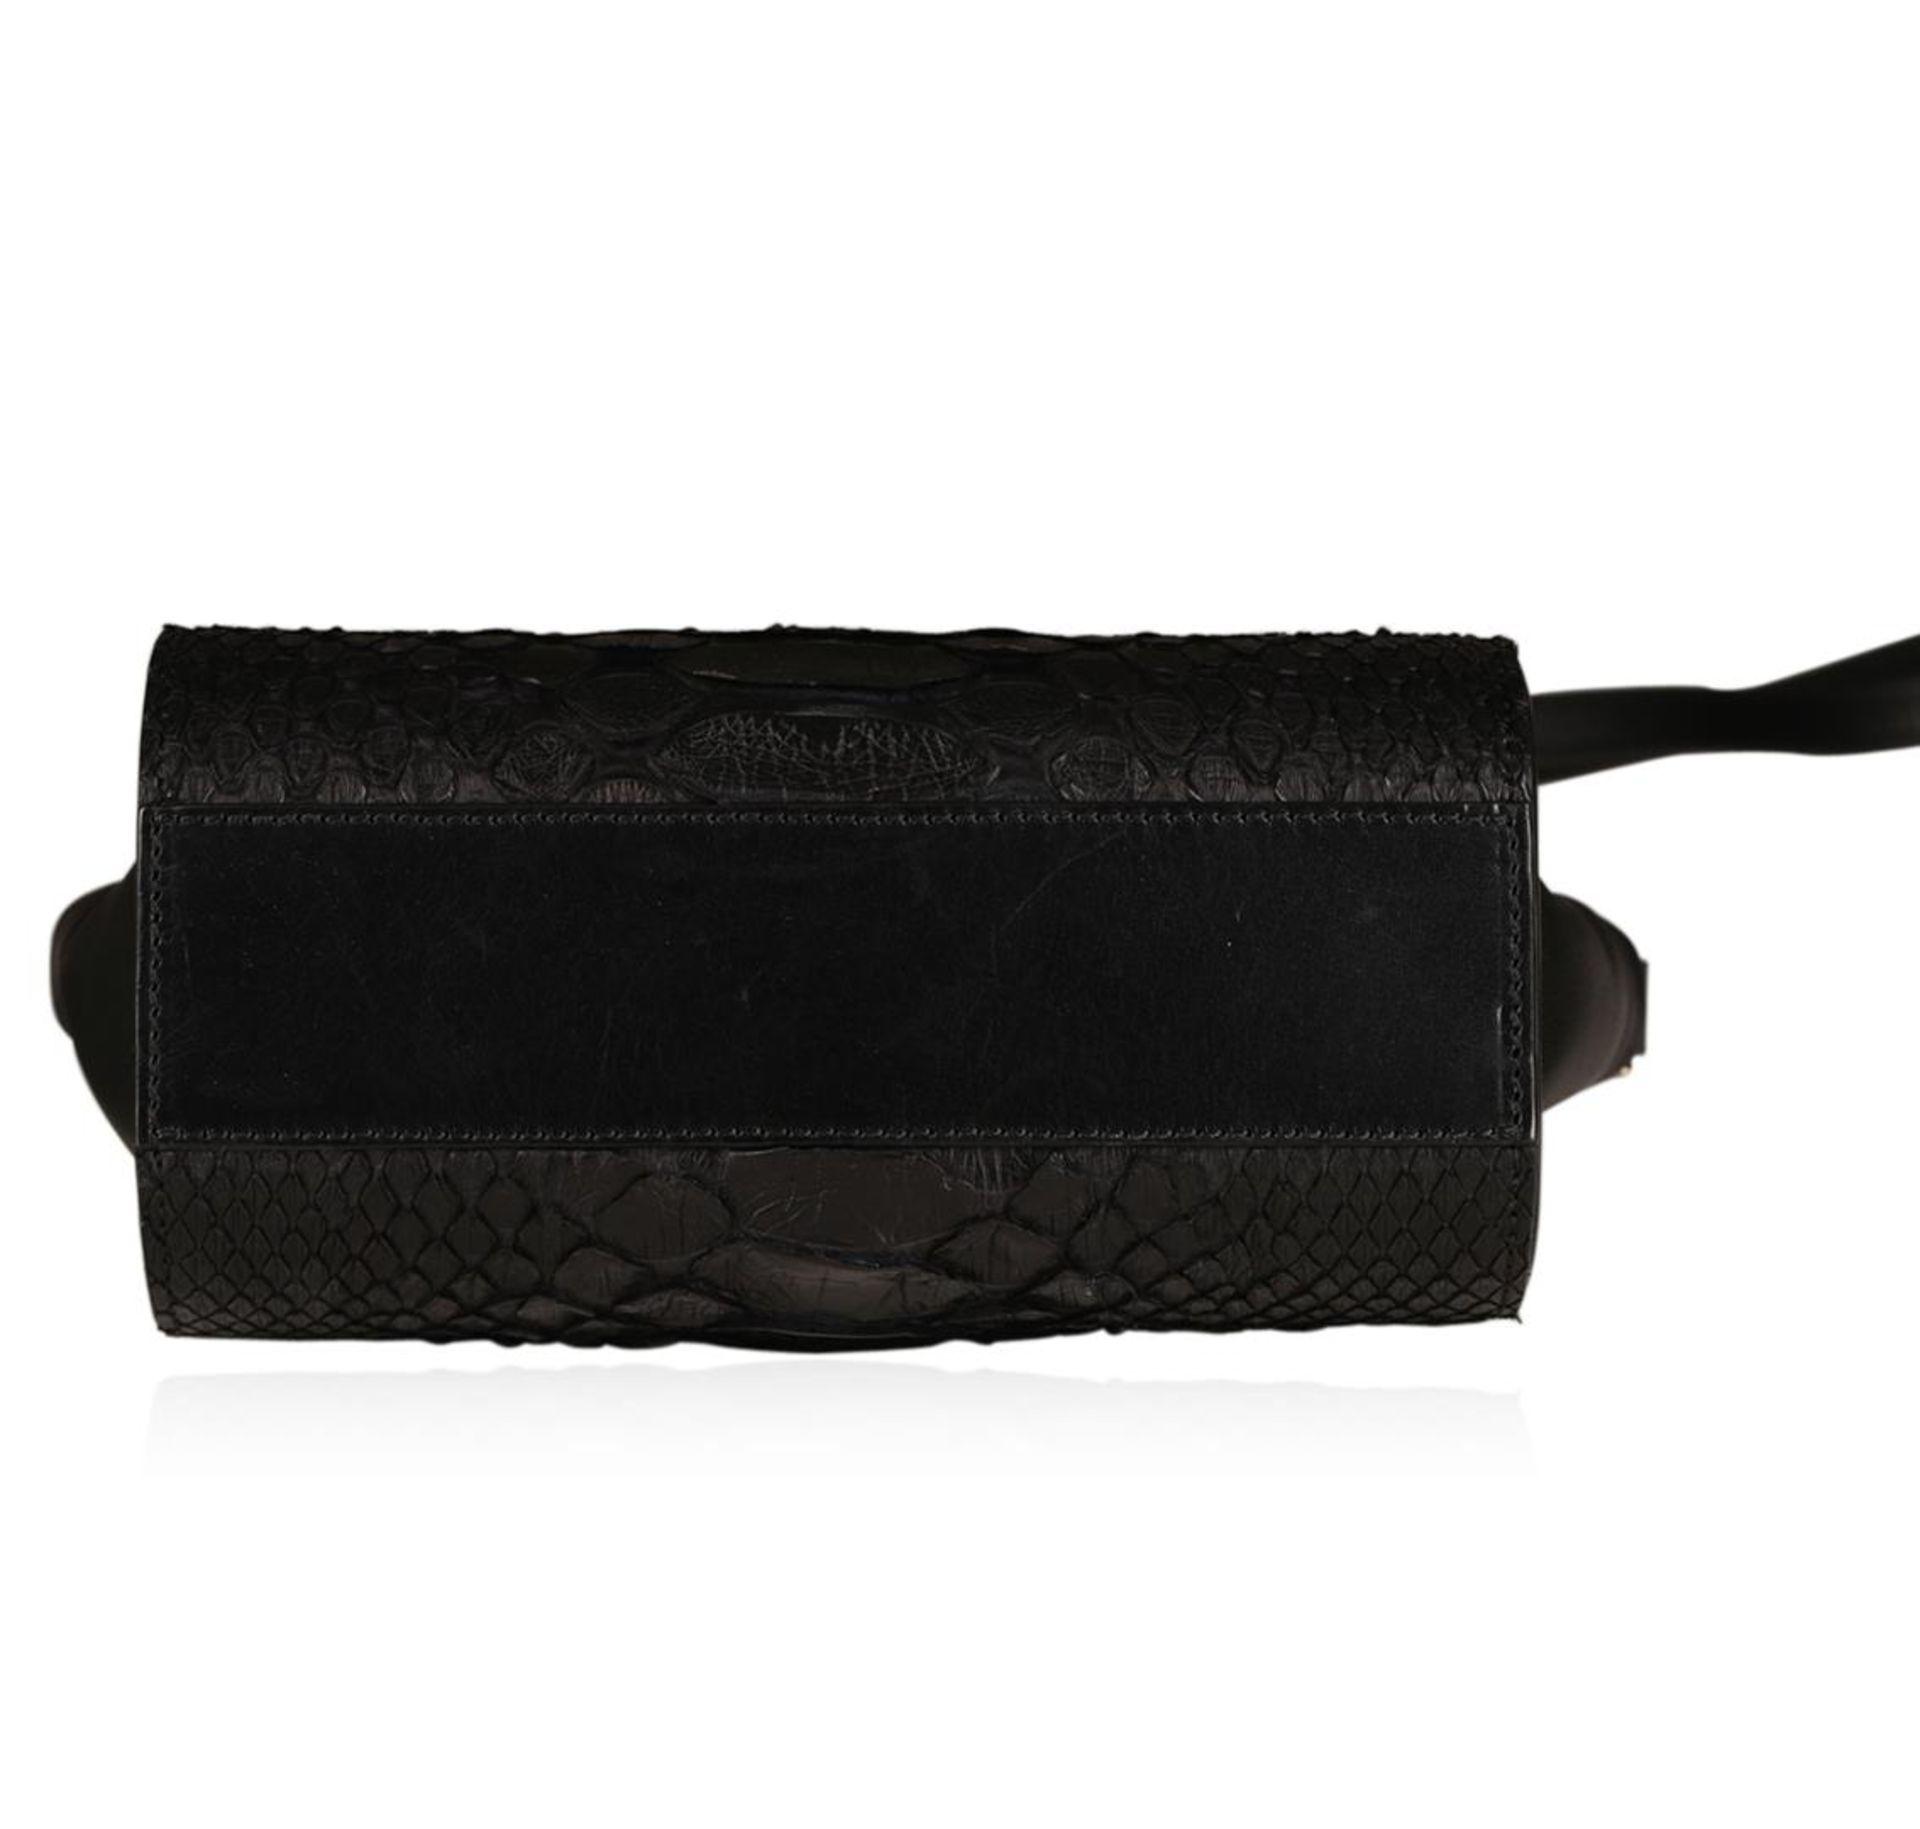 Designer Alexander Wang Convertible Black Python Pelican Sling Bag - Image 3 of 3